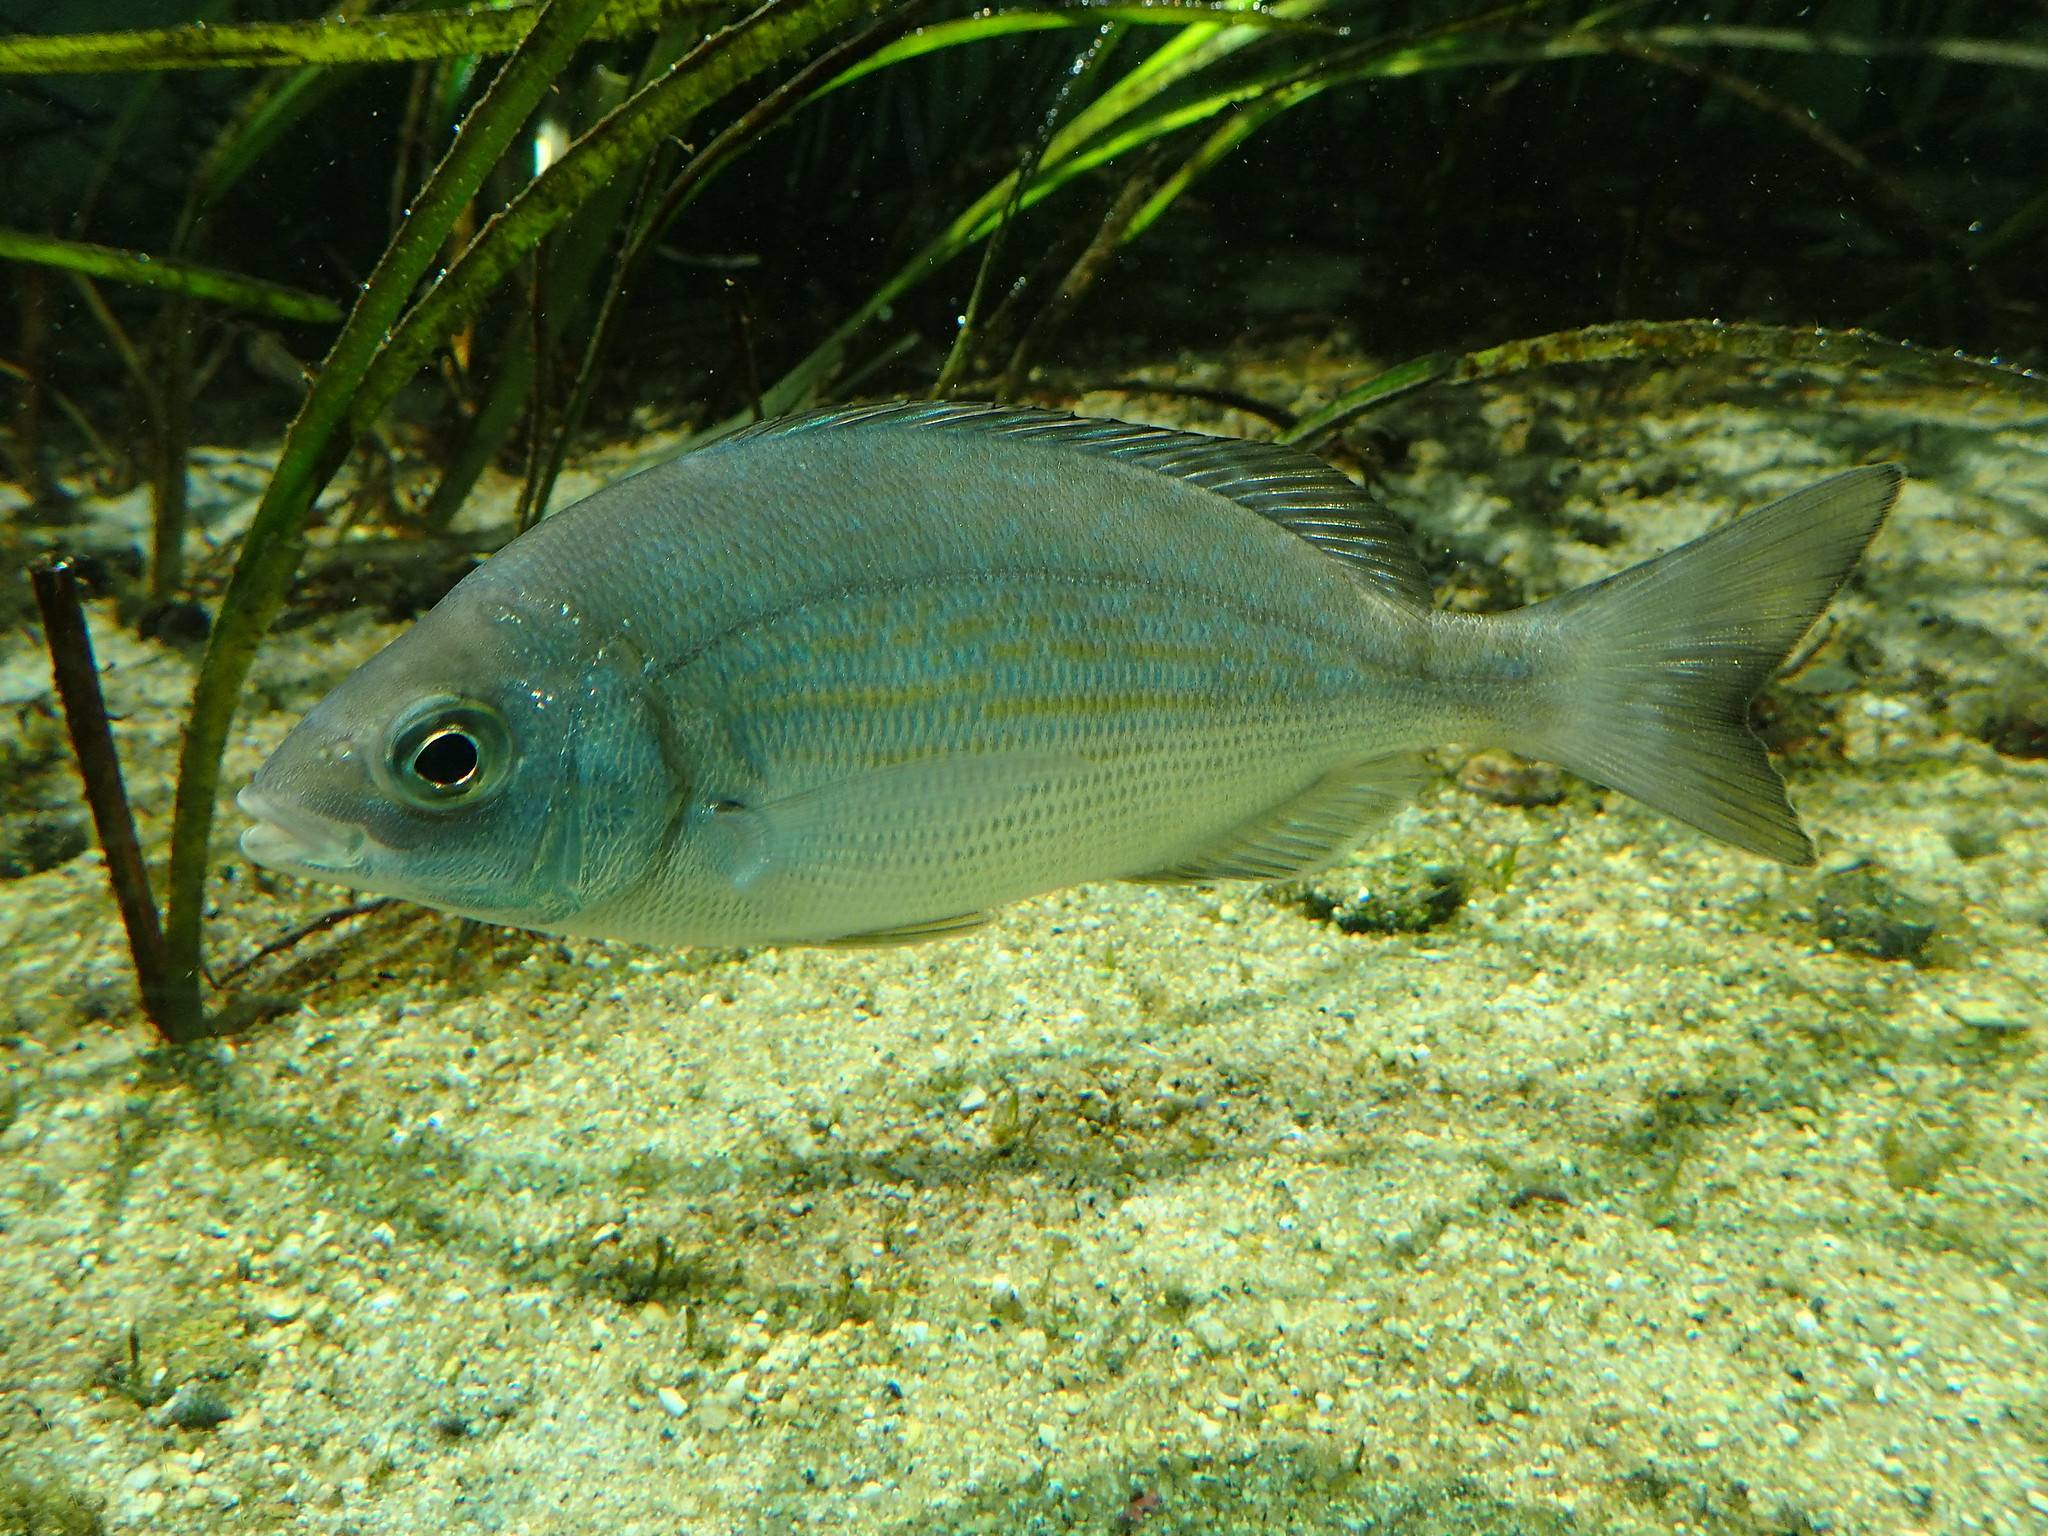 Рыба «морской карась-ласкирь» фото и описание